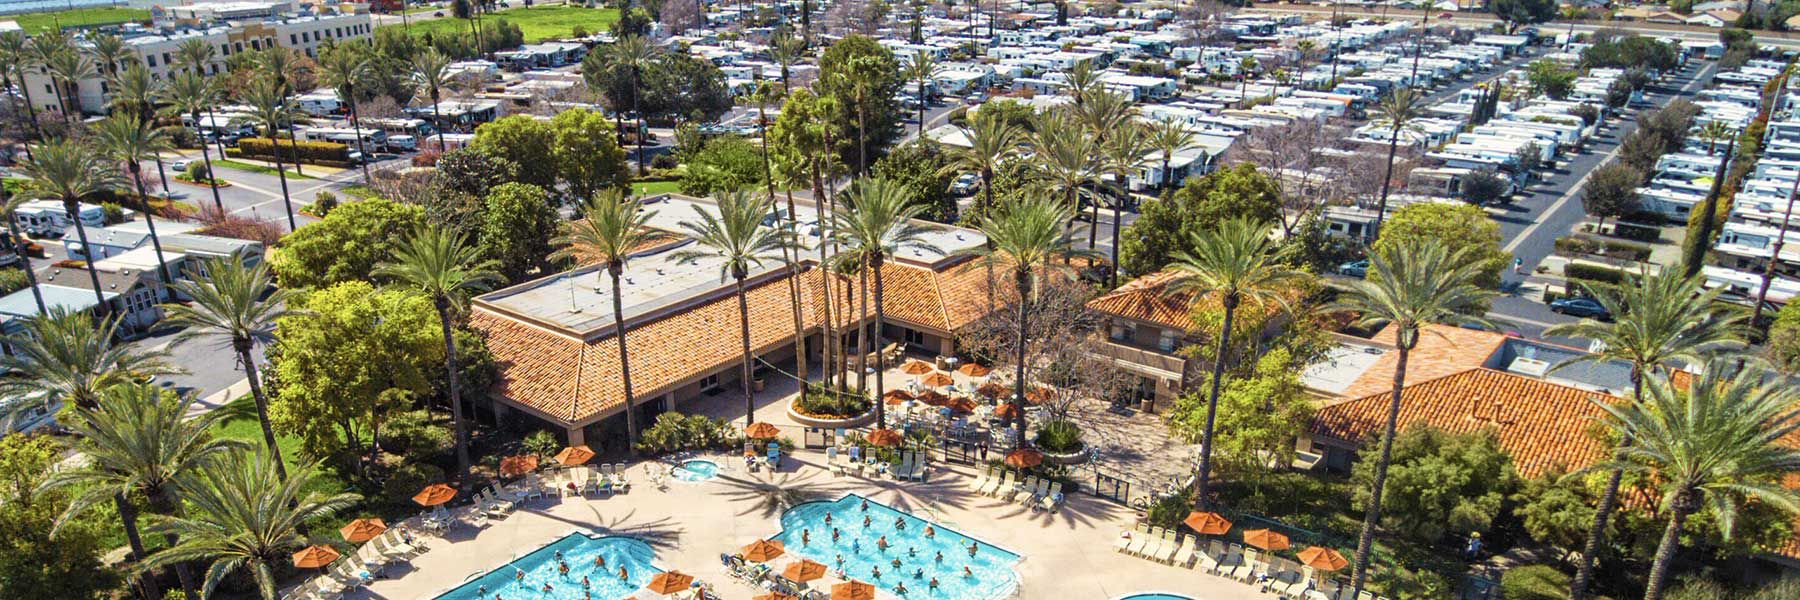 Resort map of Golden Village Palms Hemet California